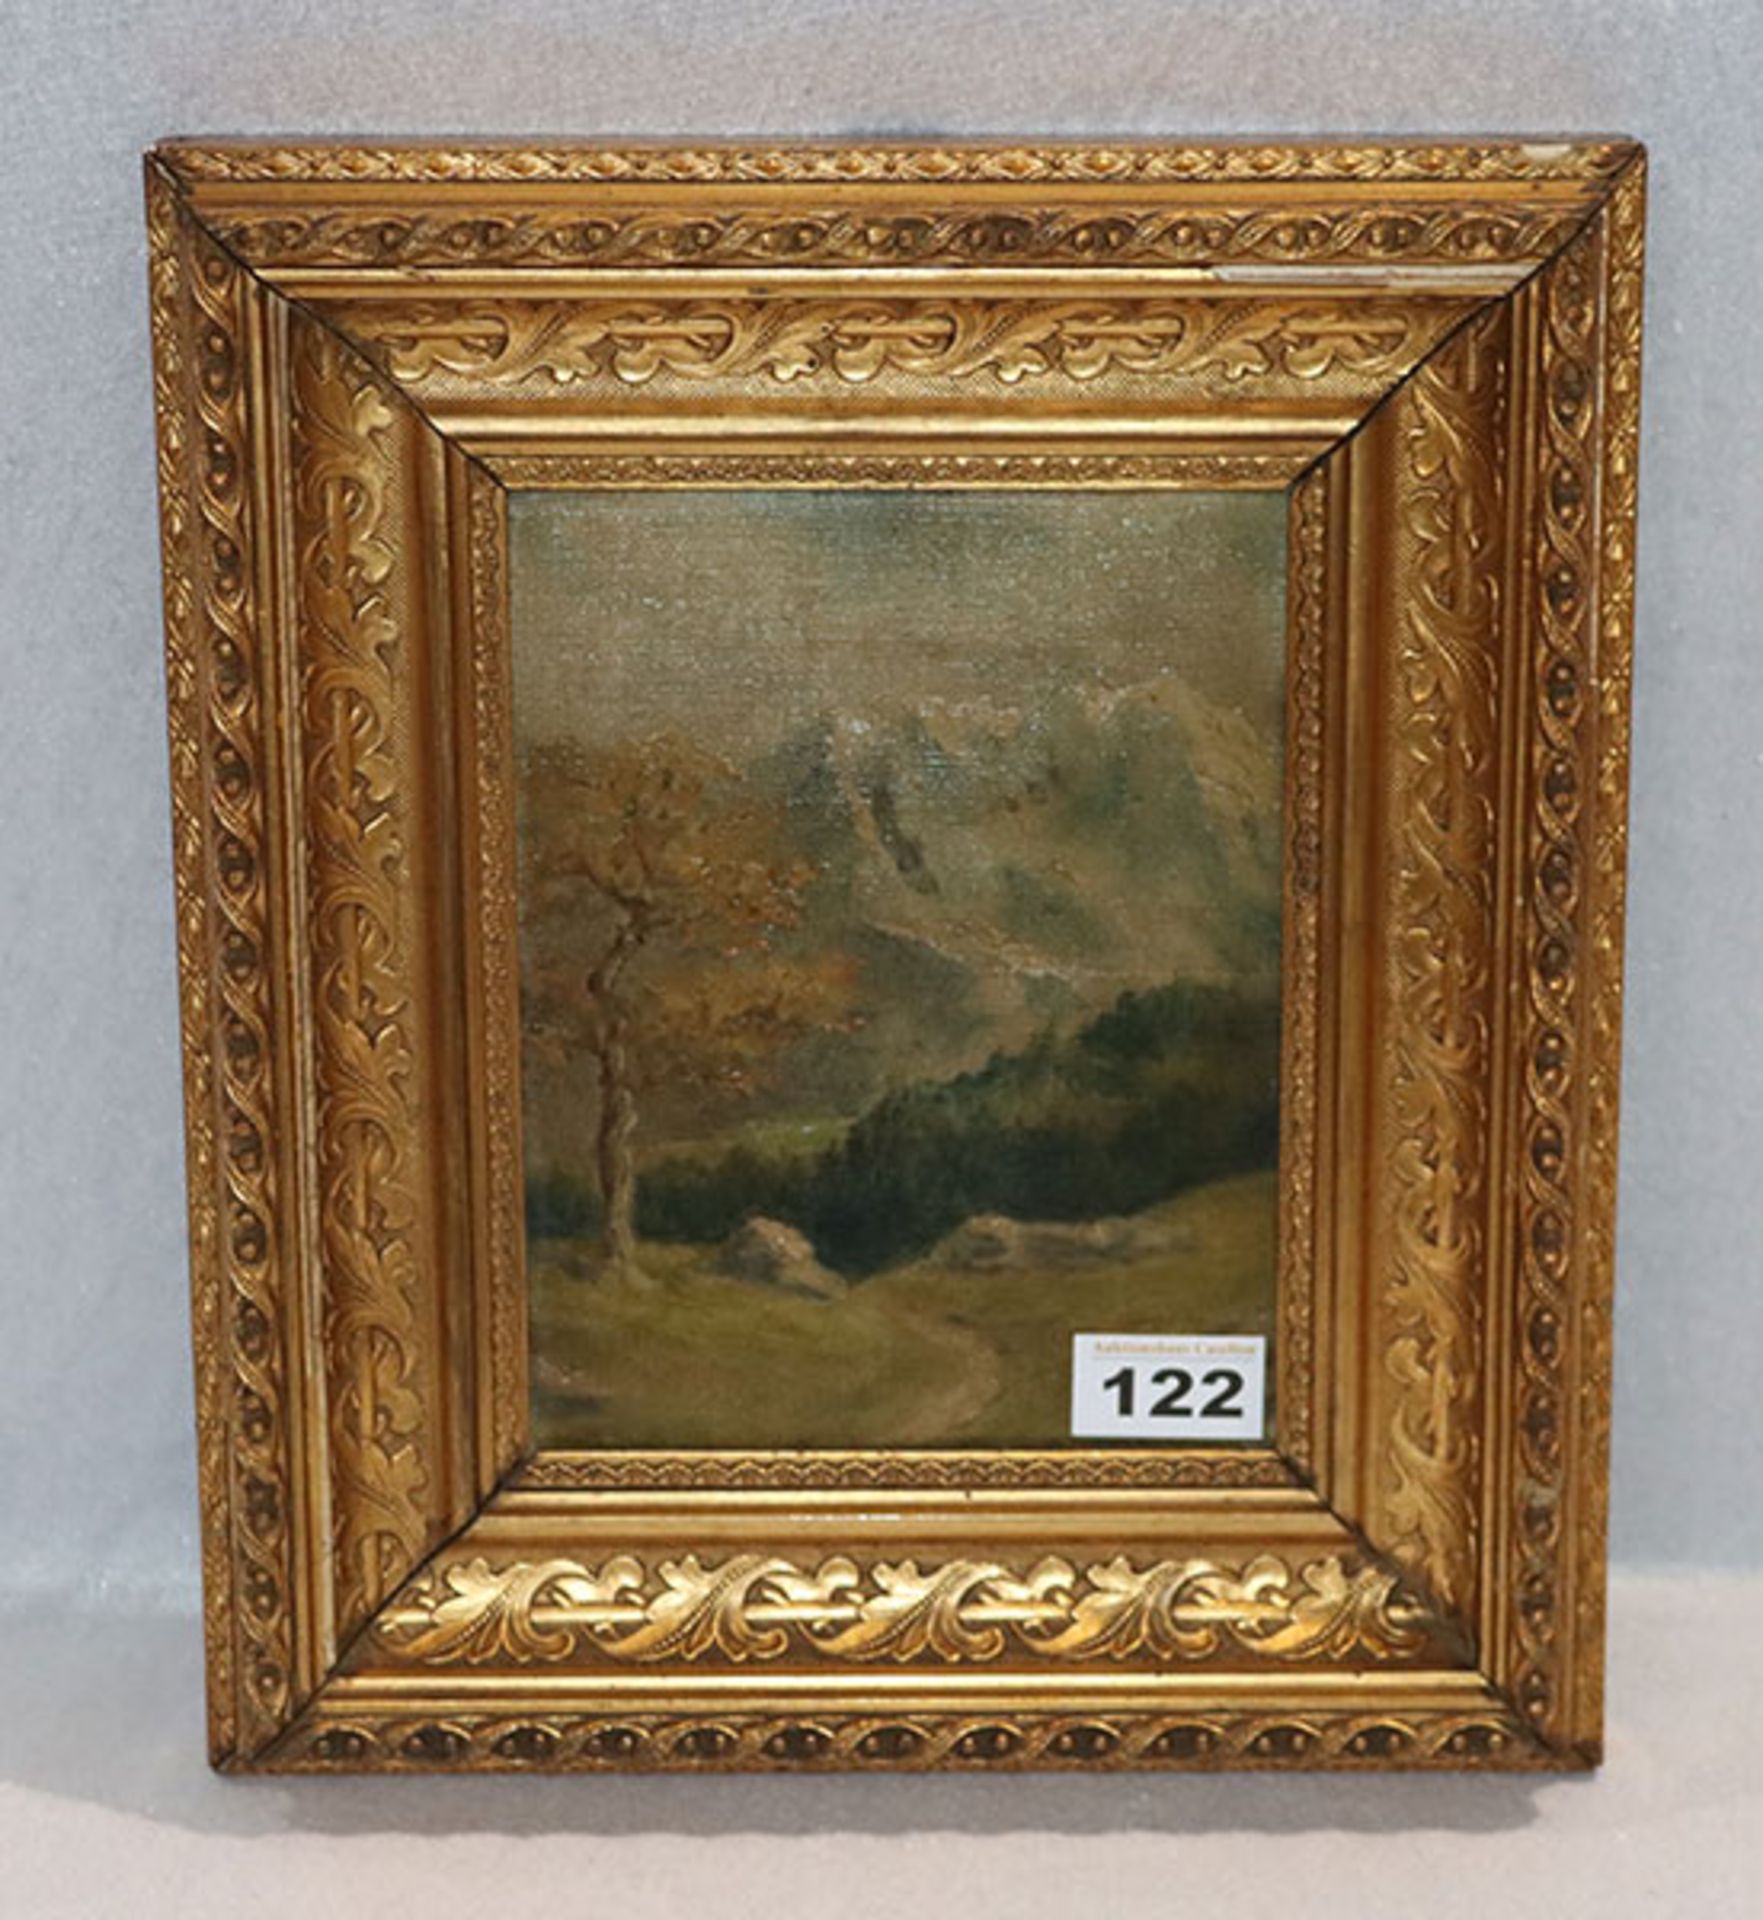 Gemälde ÖL/LW 'Gebirgs-Landschaft', gerahmt, Rahmen bestossen, incl. Rahmen 32 cm x 28 cm